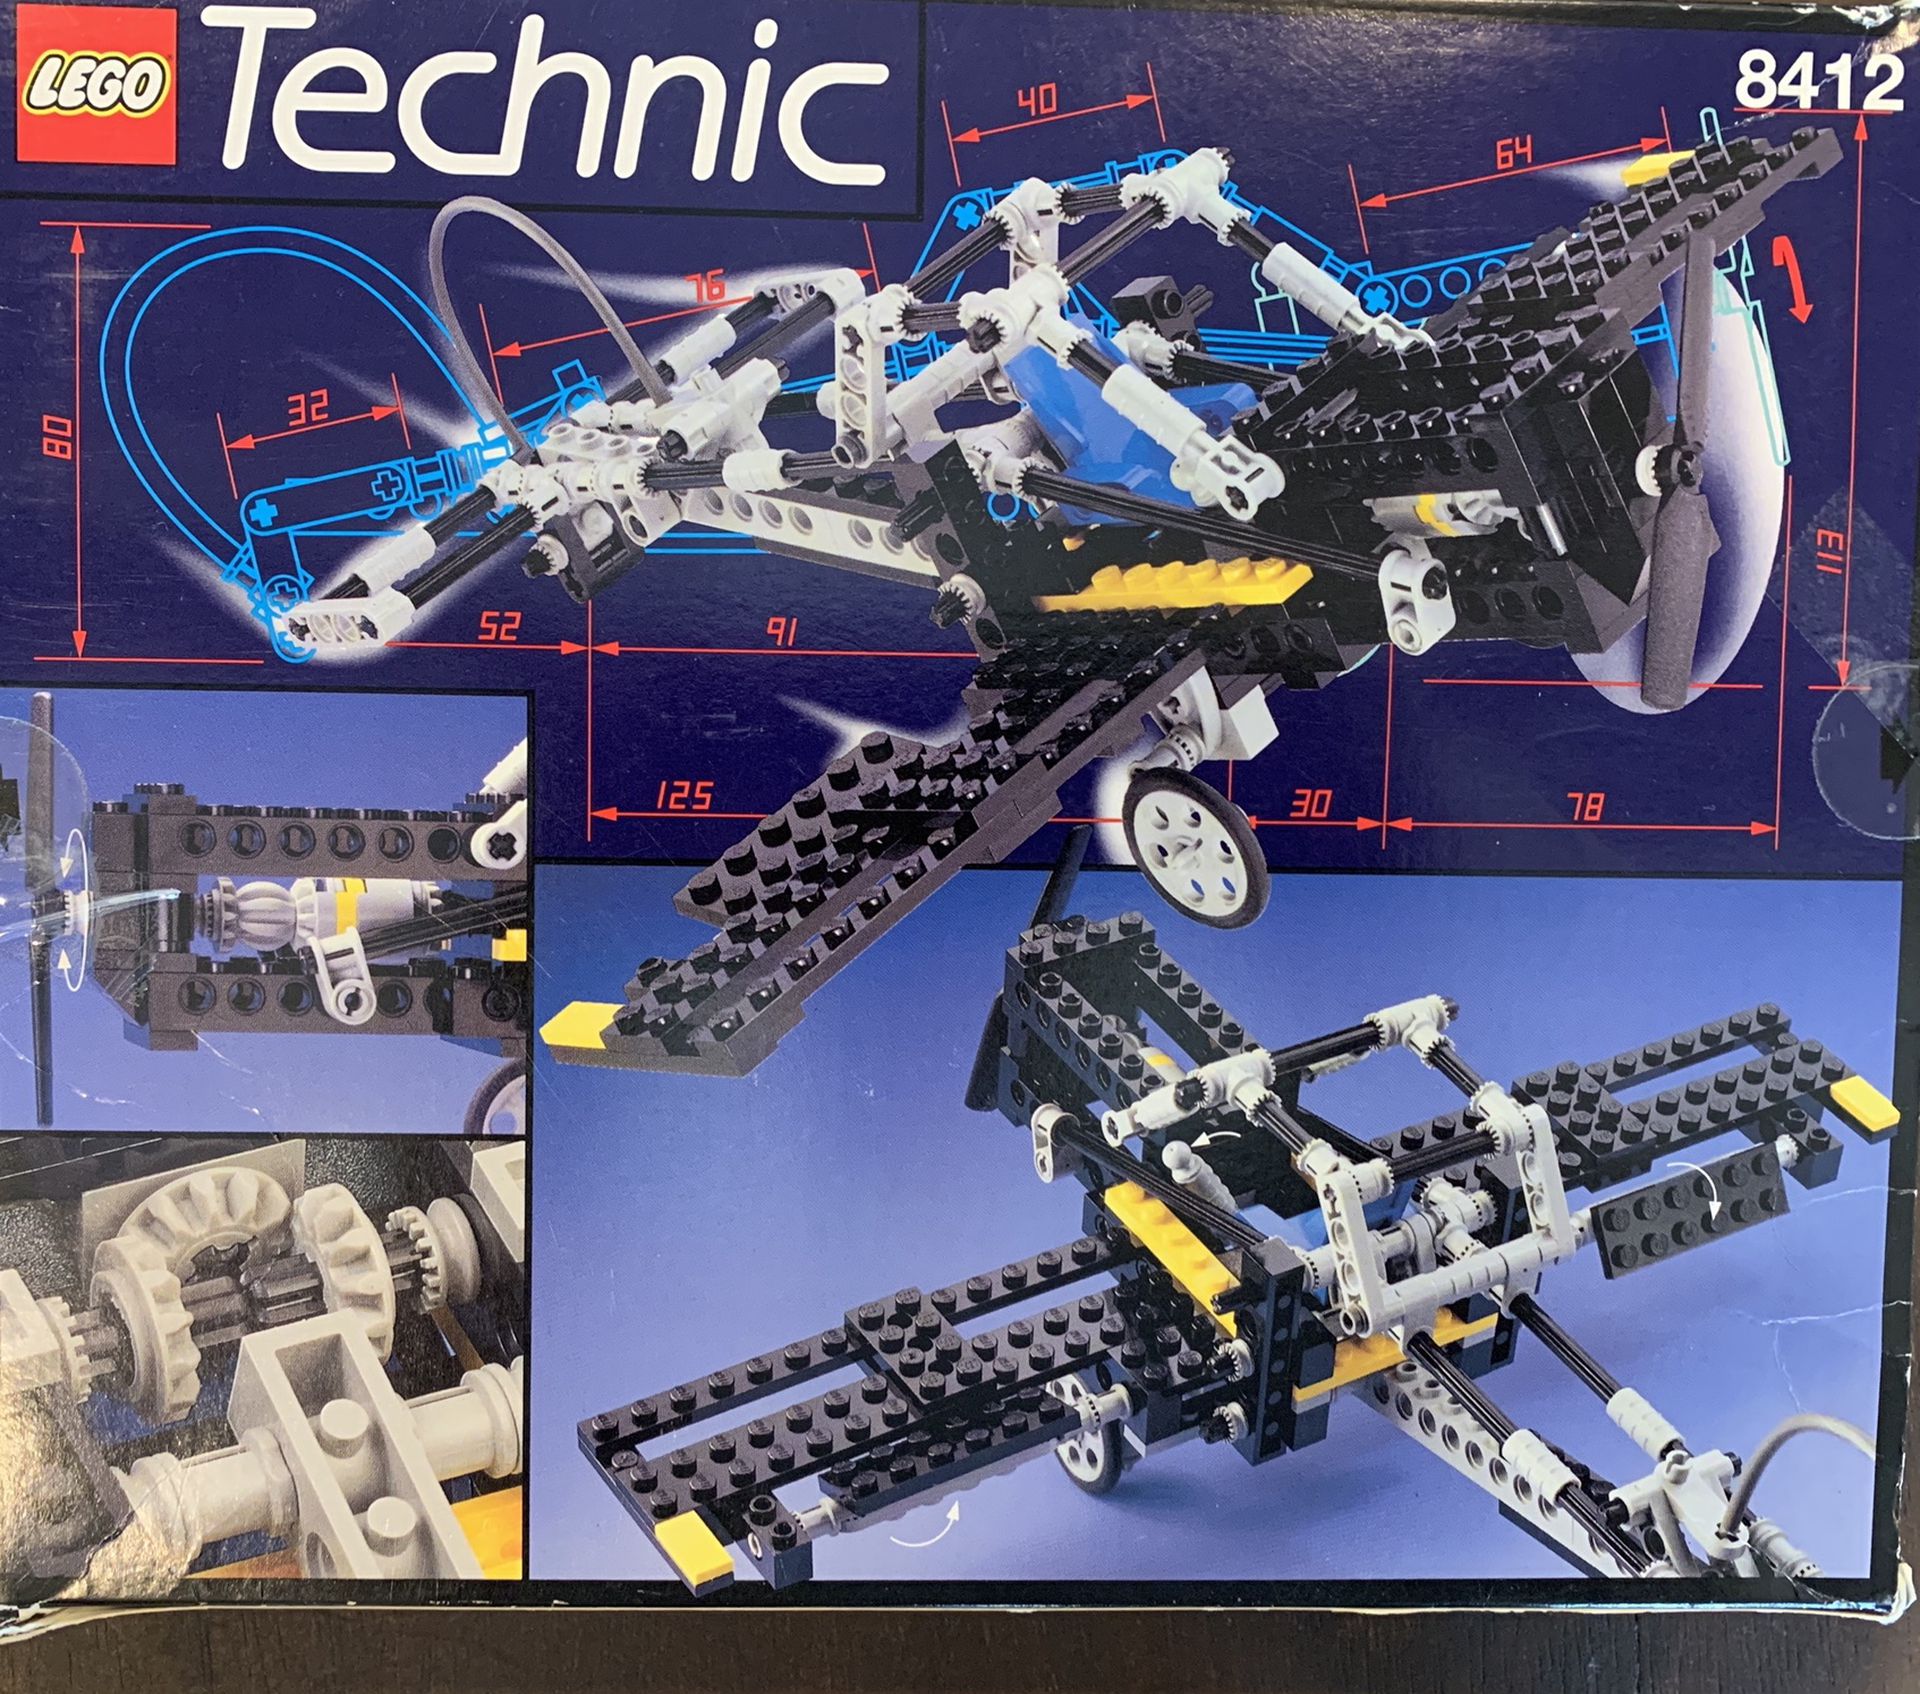 Technic Lego Set